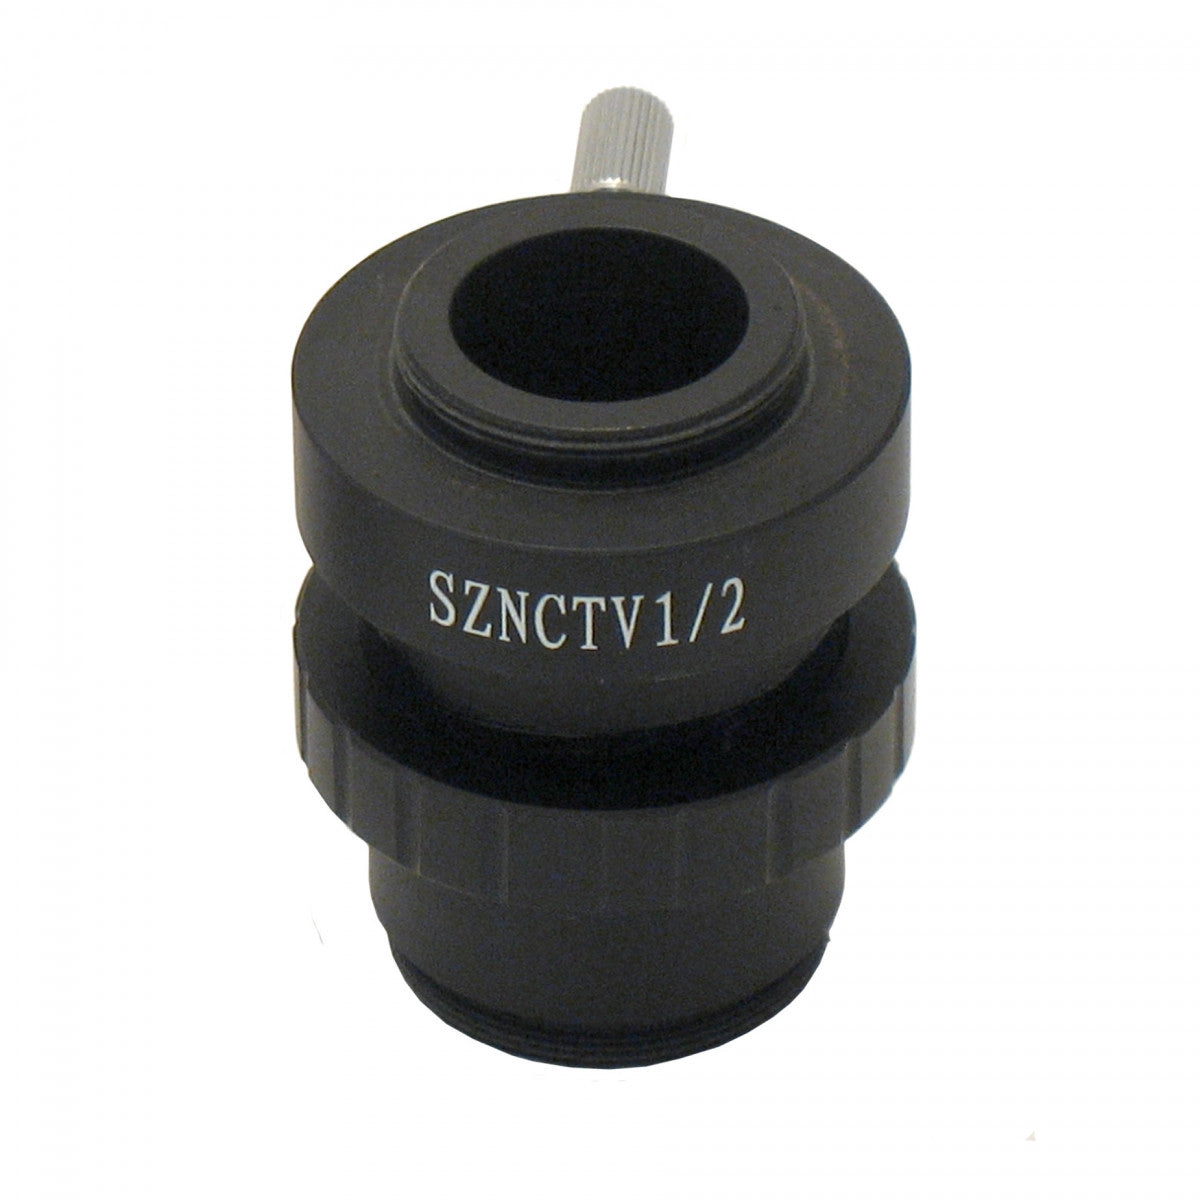 Unitron 0.5x Microscope Camera Adapter for Z645